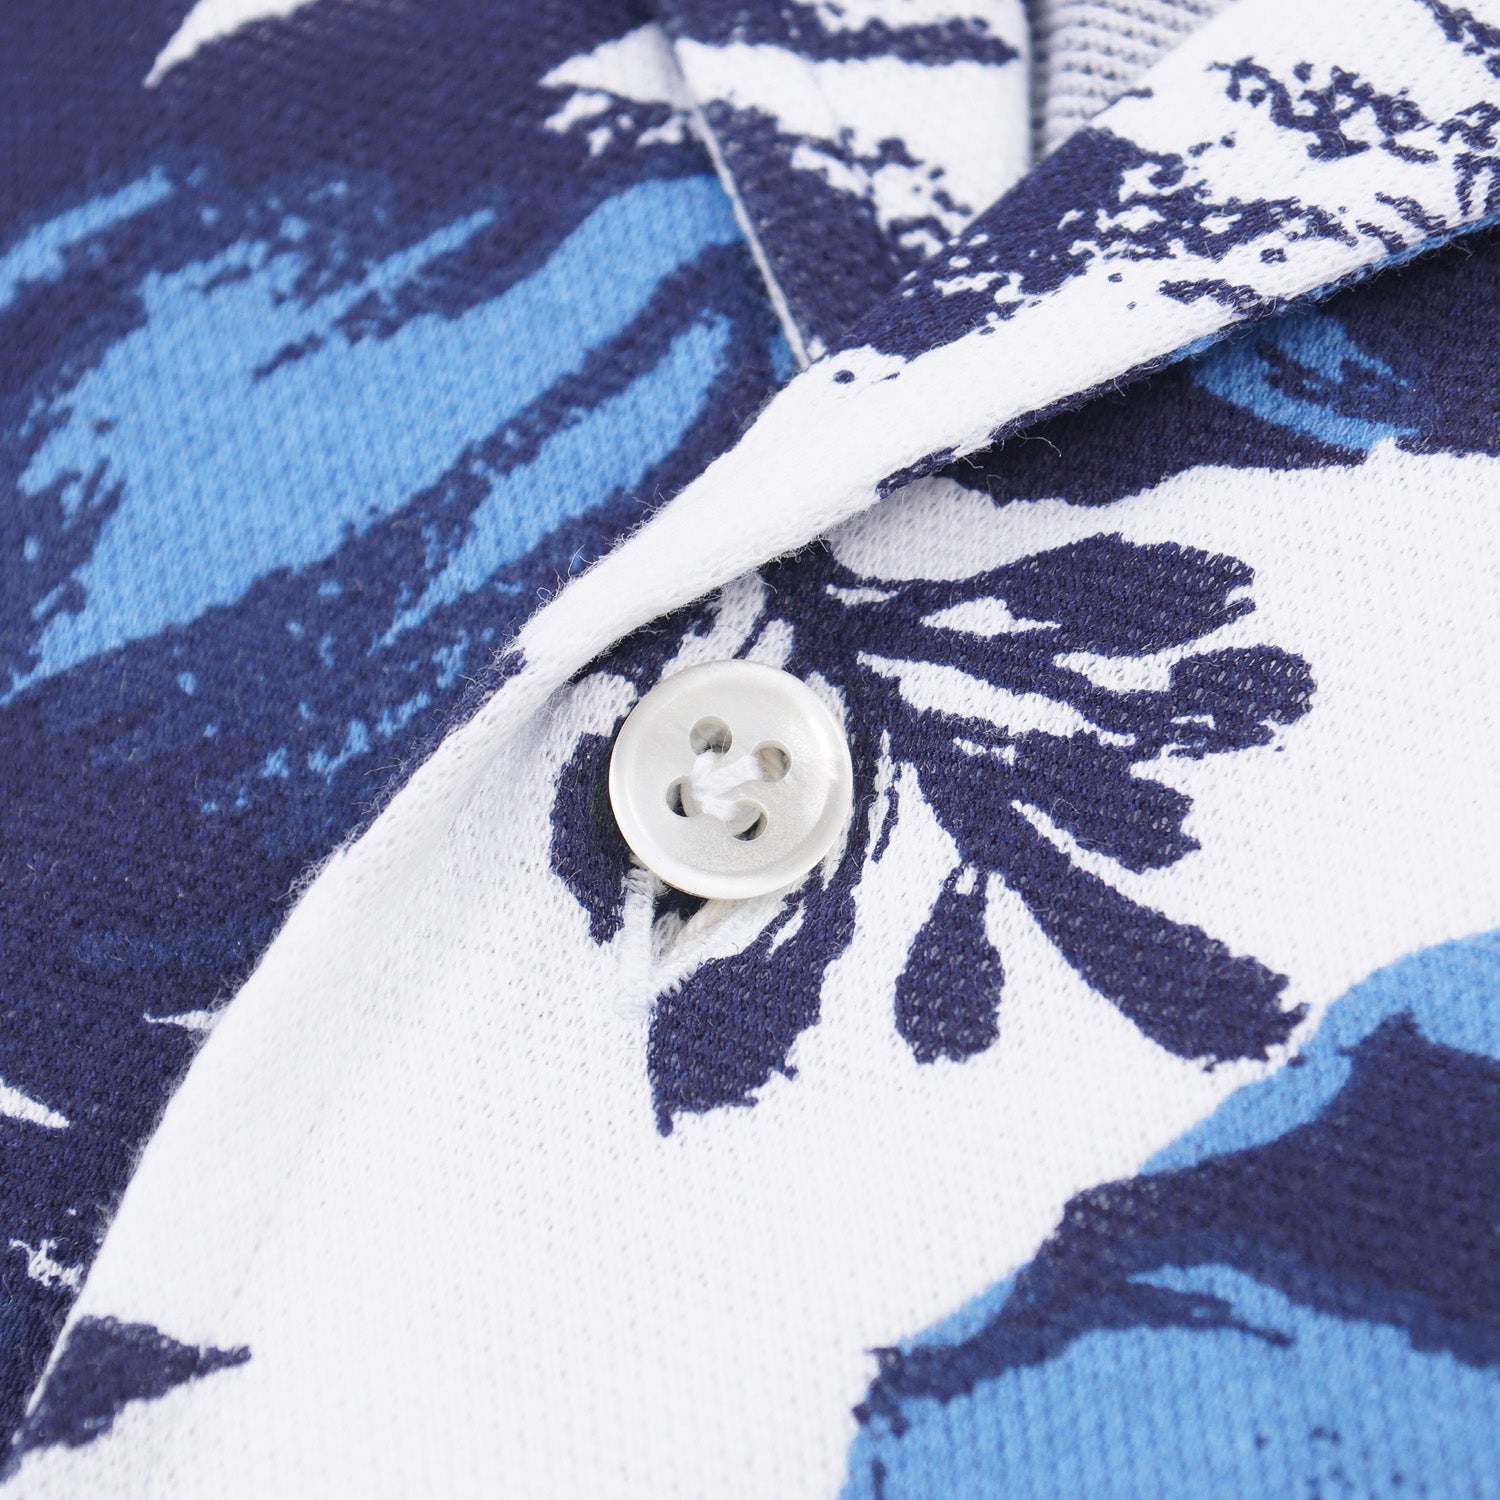 Luigi Borrelli Tropical Floral Jersey Cotton Shirt - Top Shelf Apparel